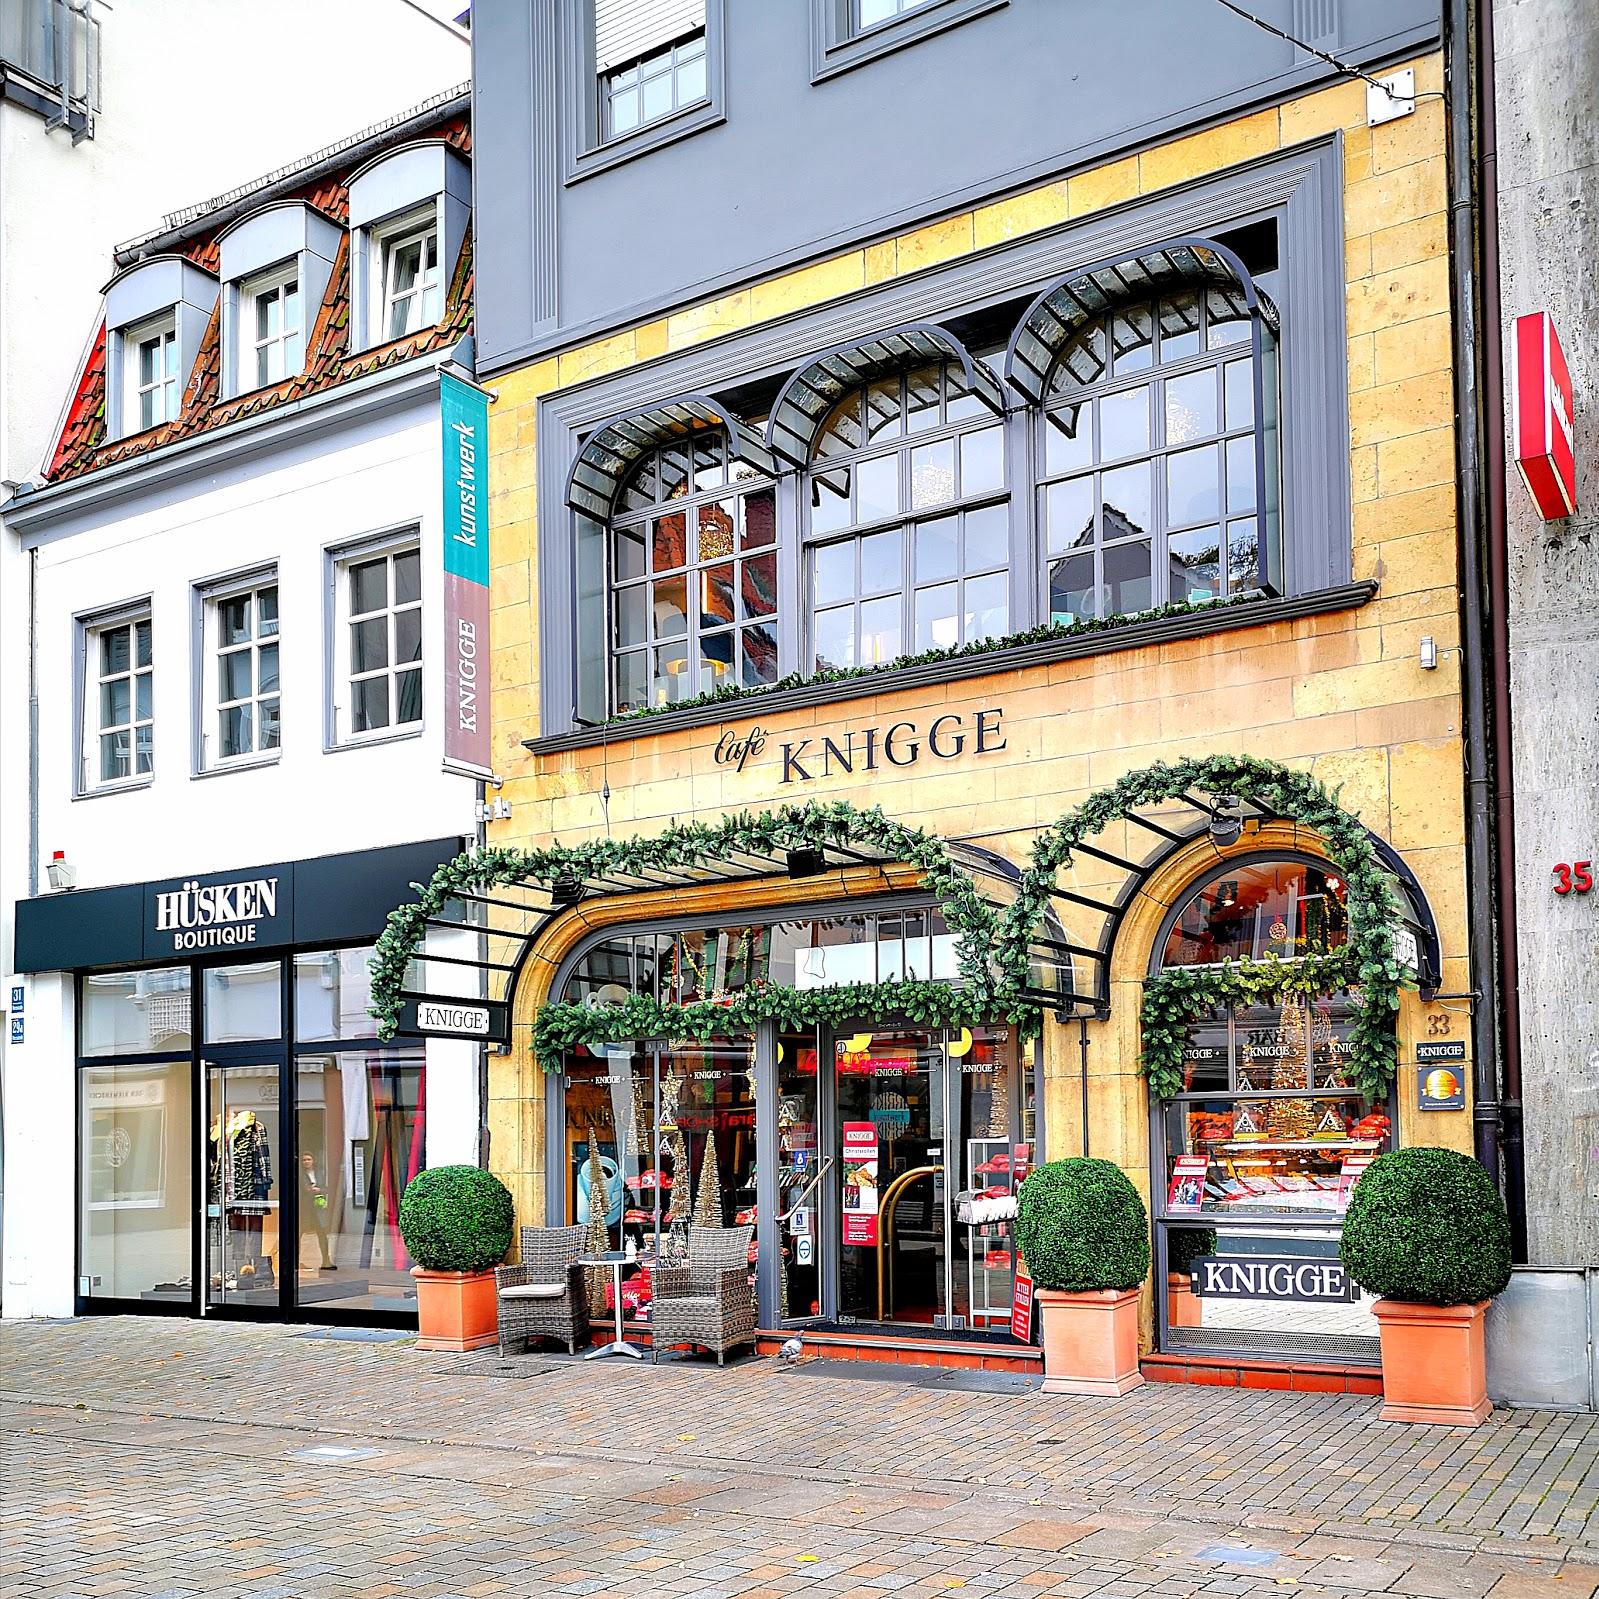 Restaurant "Café Knigge  Schokoli " in Bielefeld